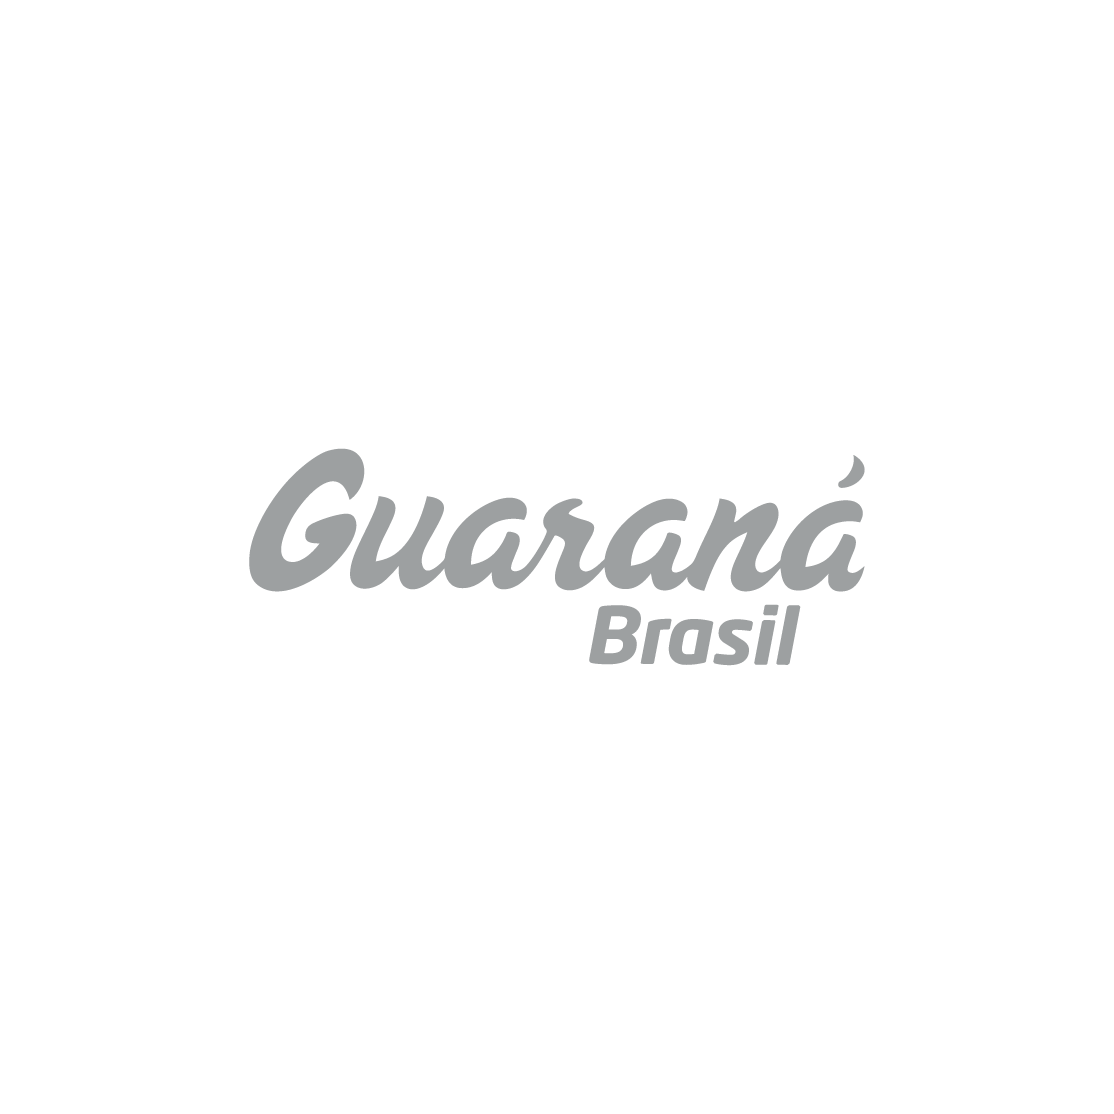 Guaraná Brasil